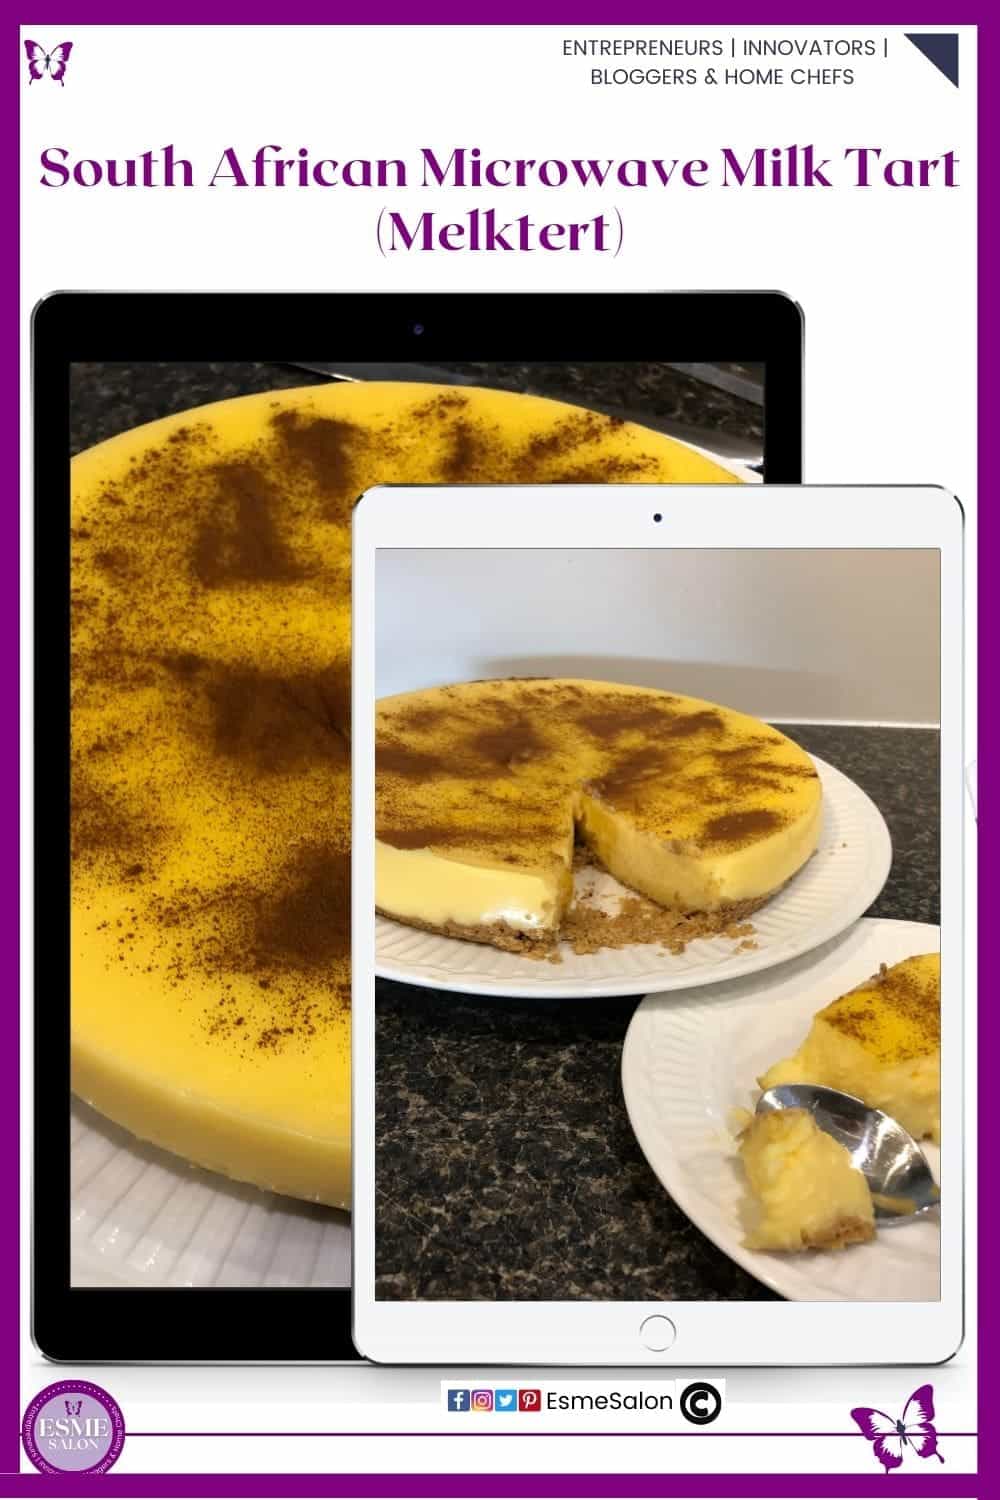 an image of a baked South African Microwave Milk Tart (Melktert) sliced